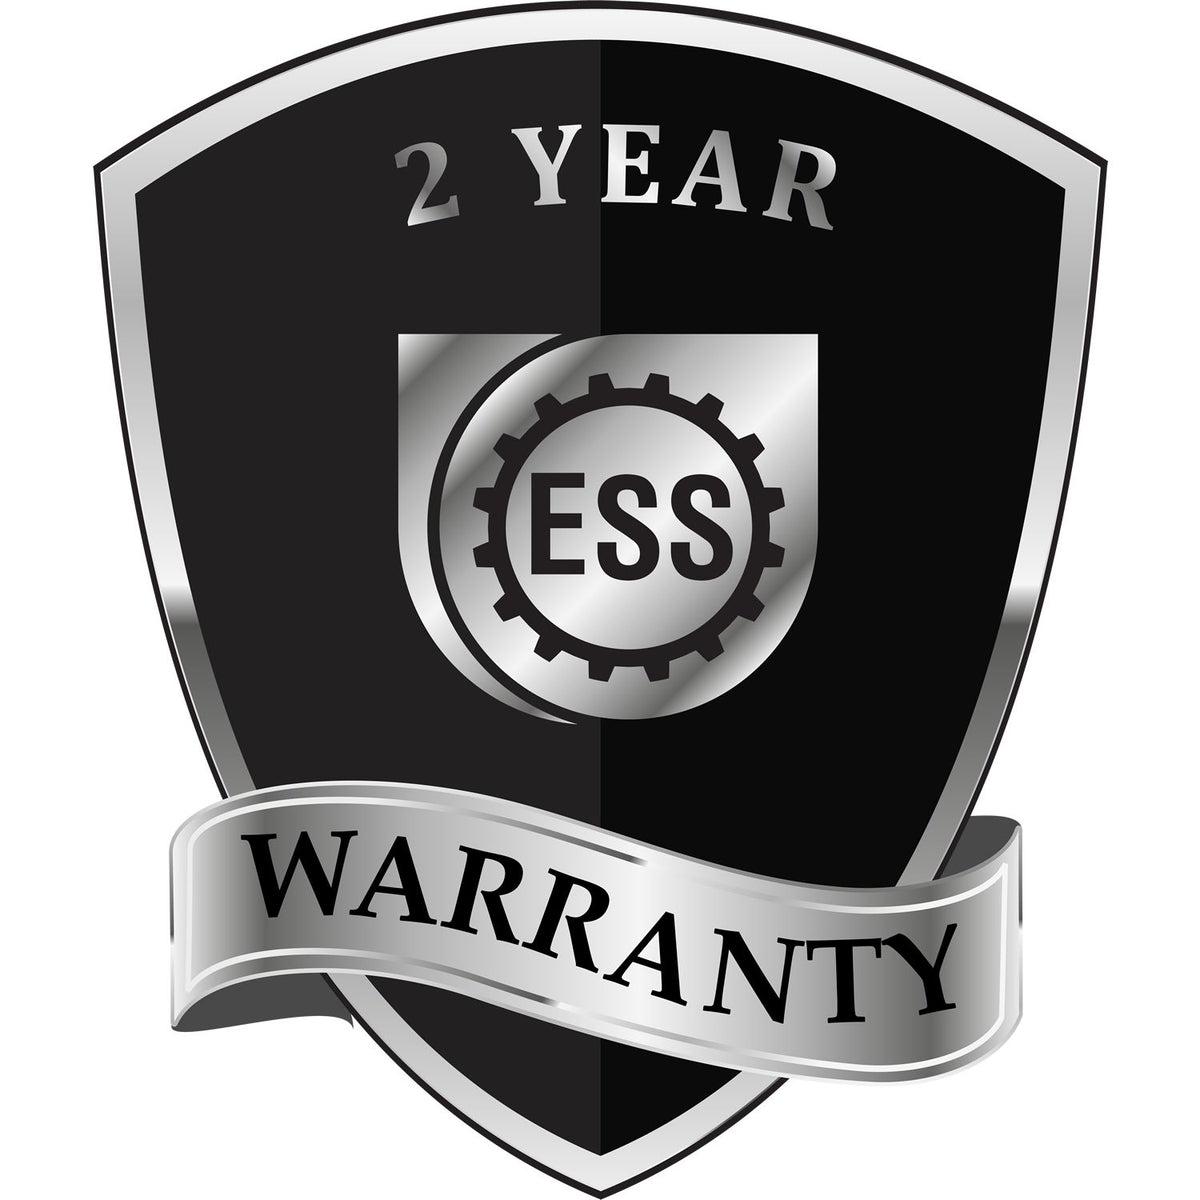 A black and silver badge or emblem showing warranty information for the Hybrid Montana Land Surveyor Seal